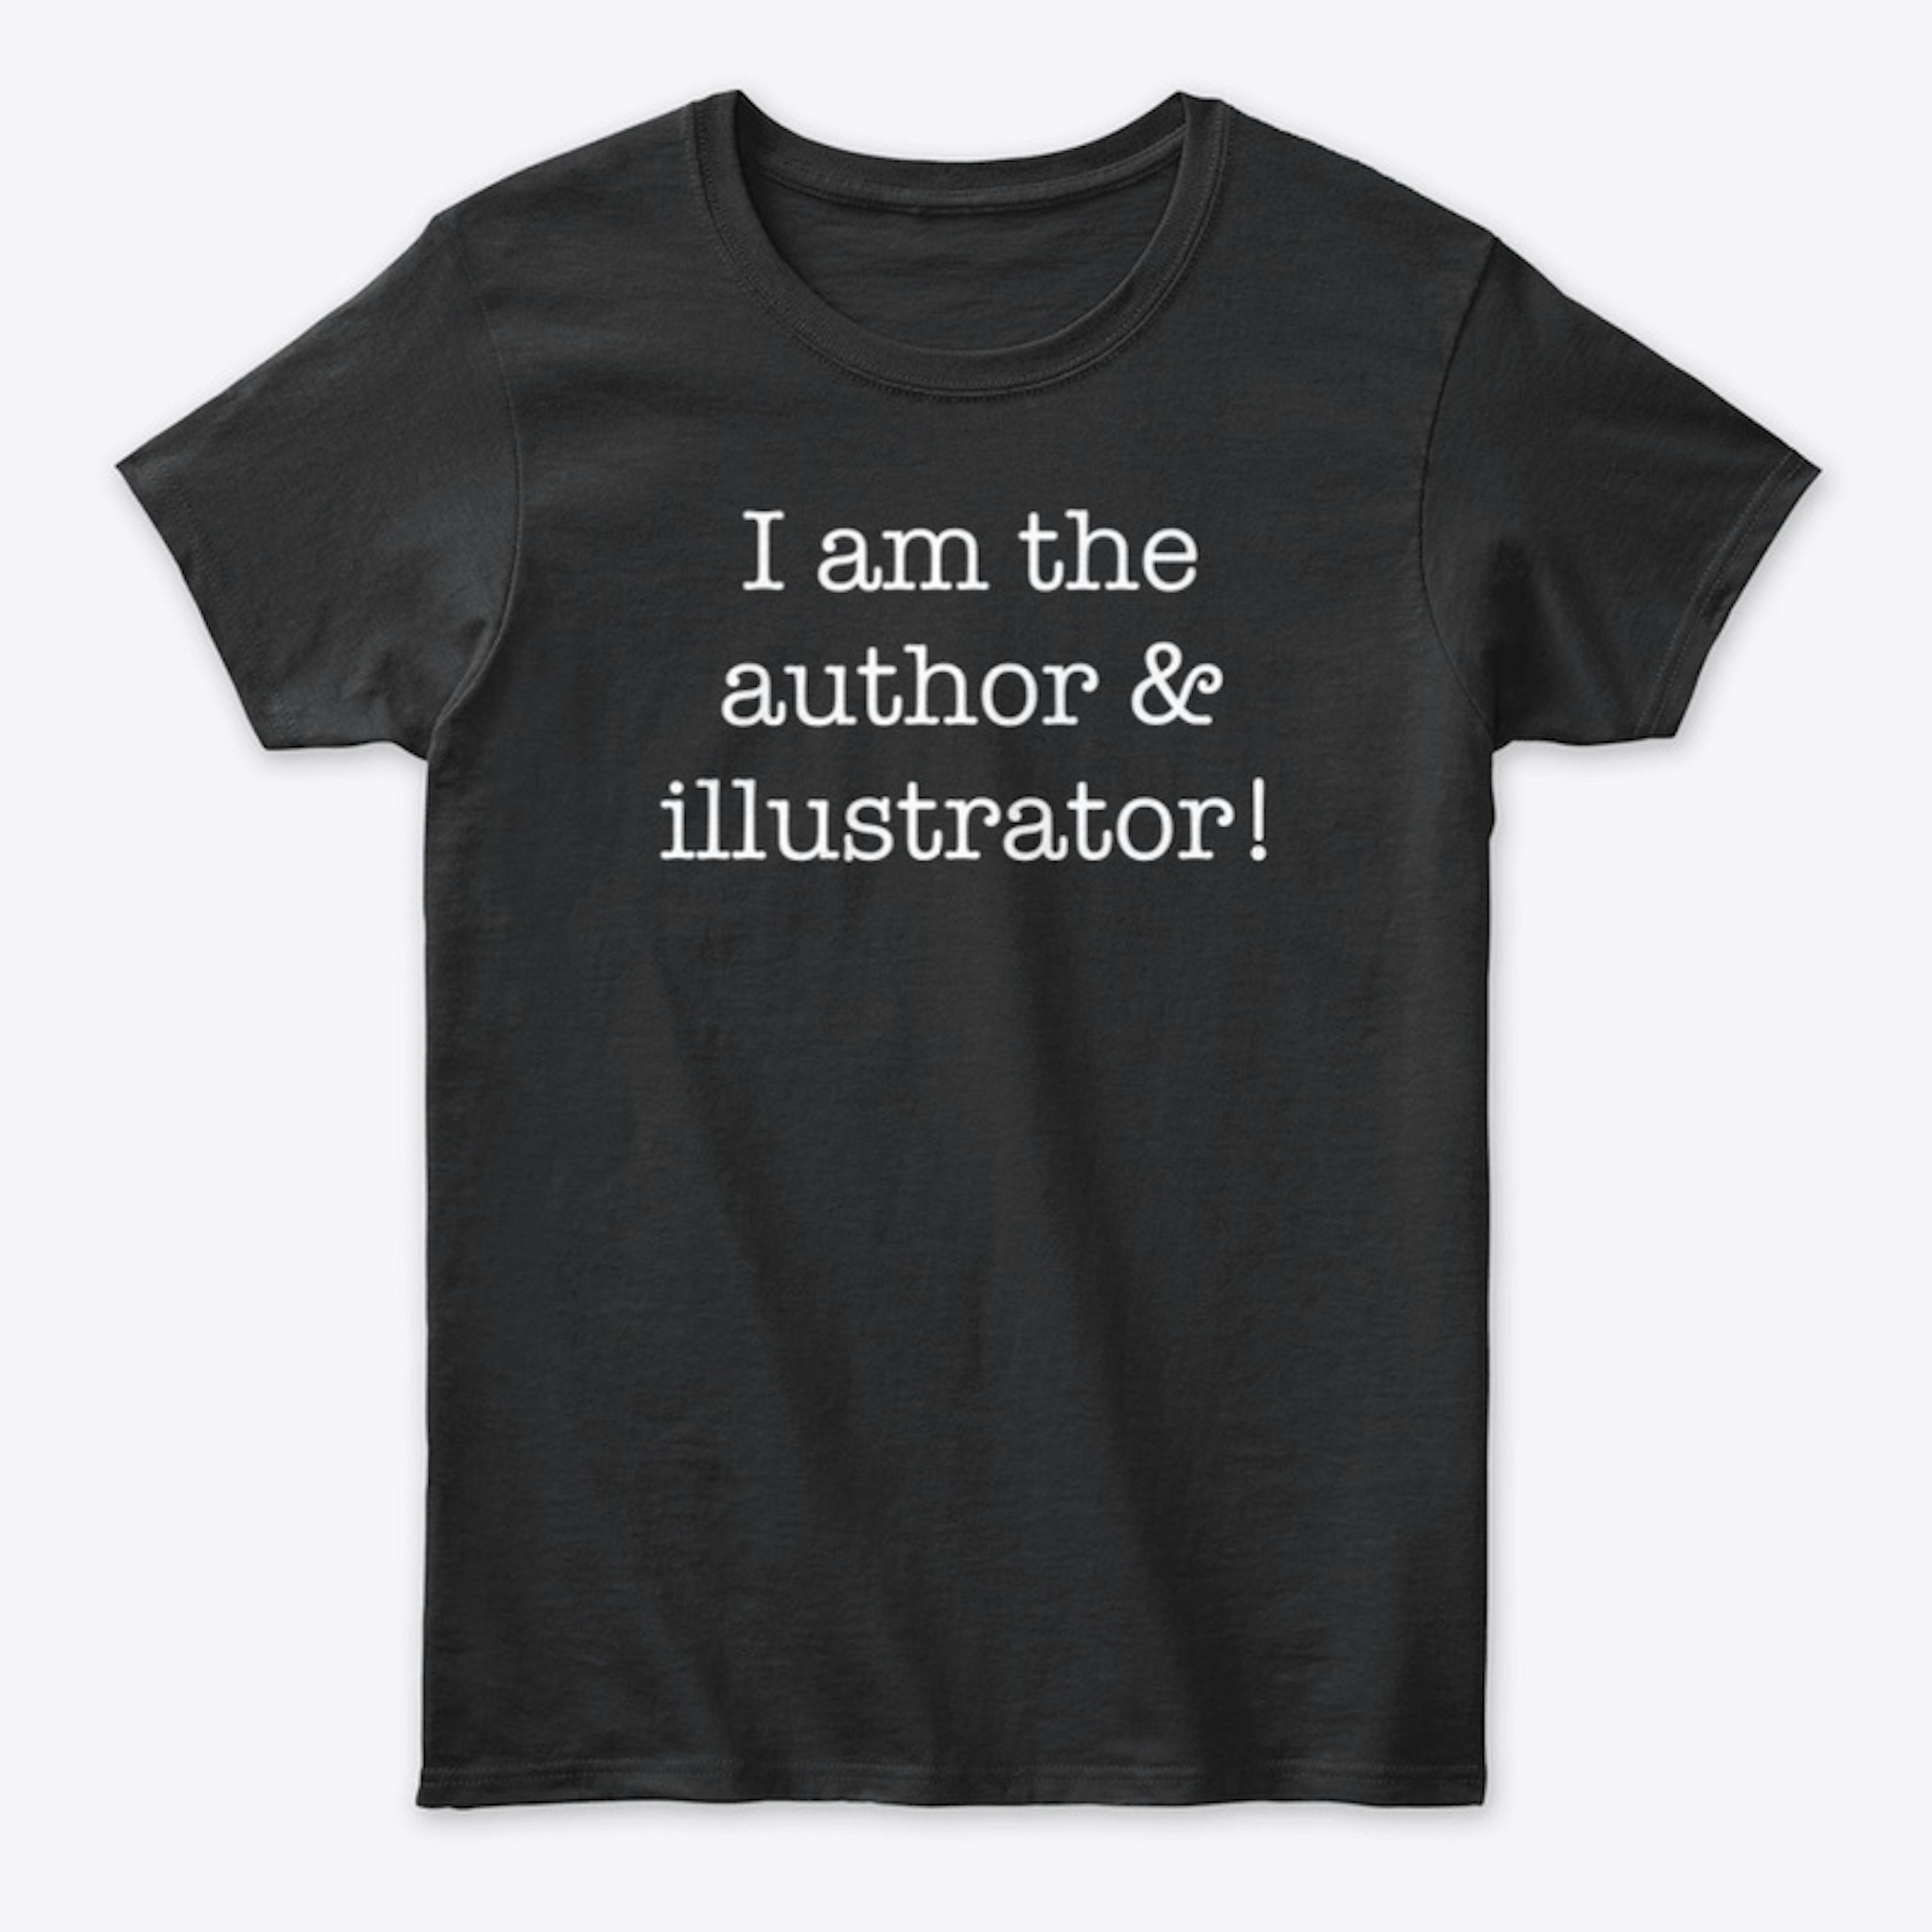 I am the Author & Illustrator 